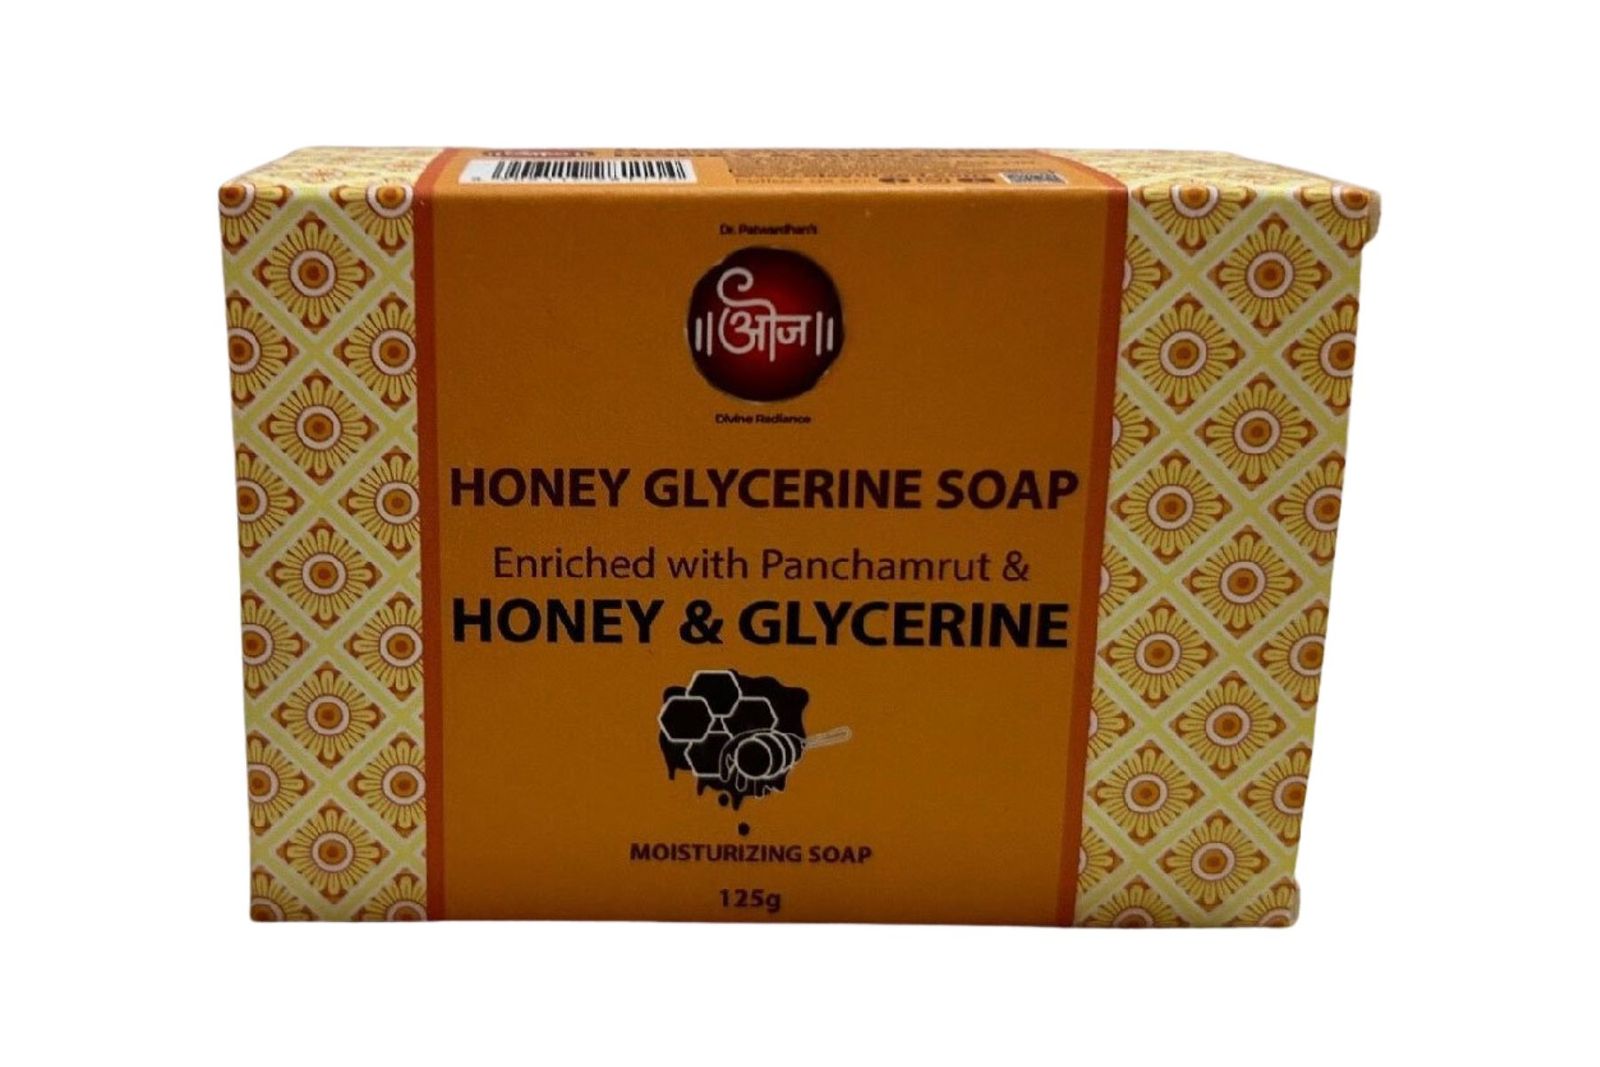 Ooj Honey and Glycerine Soap